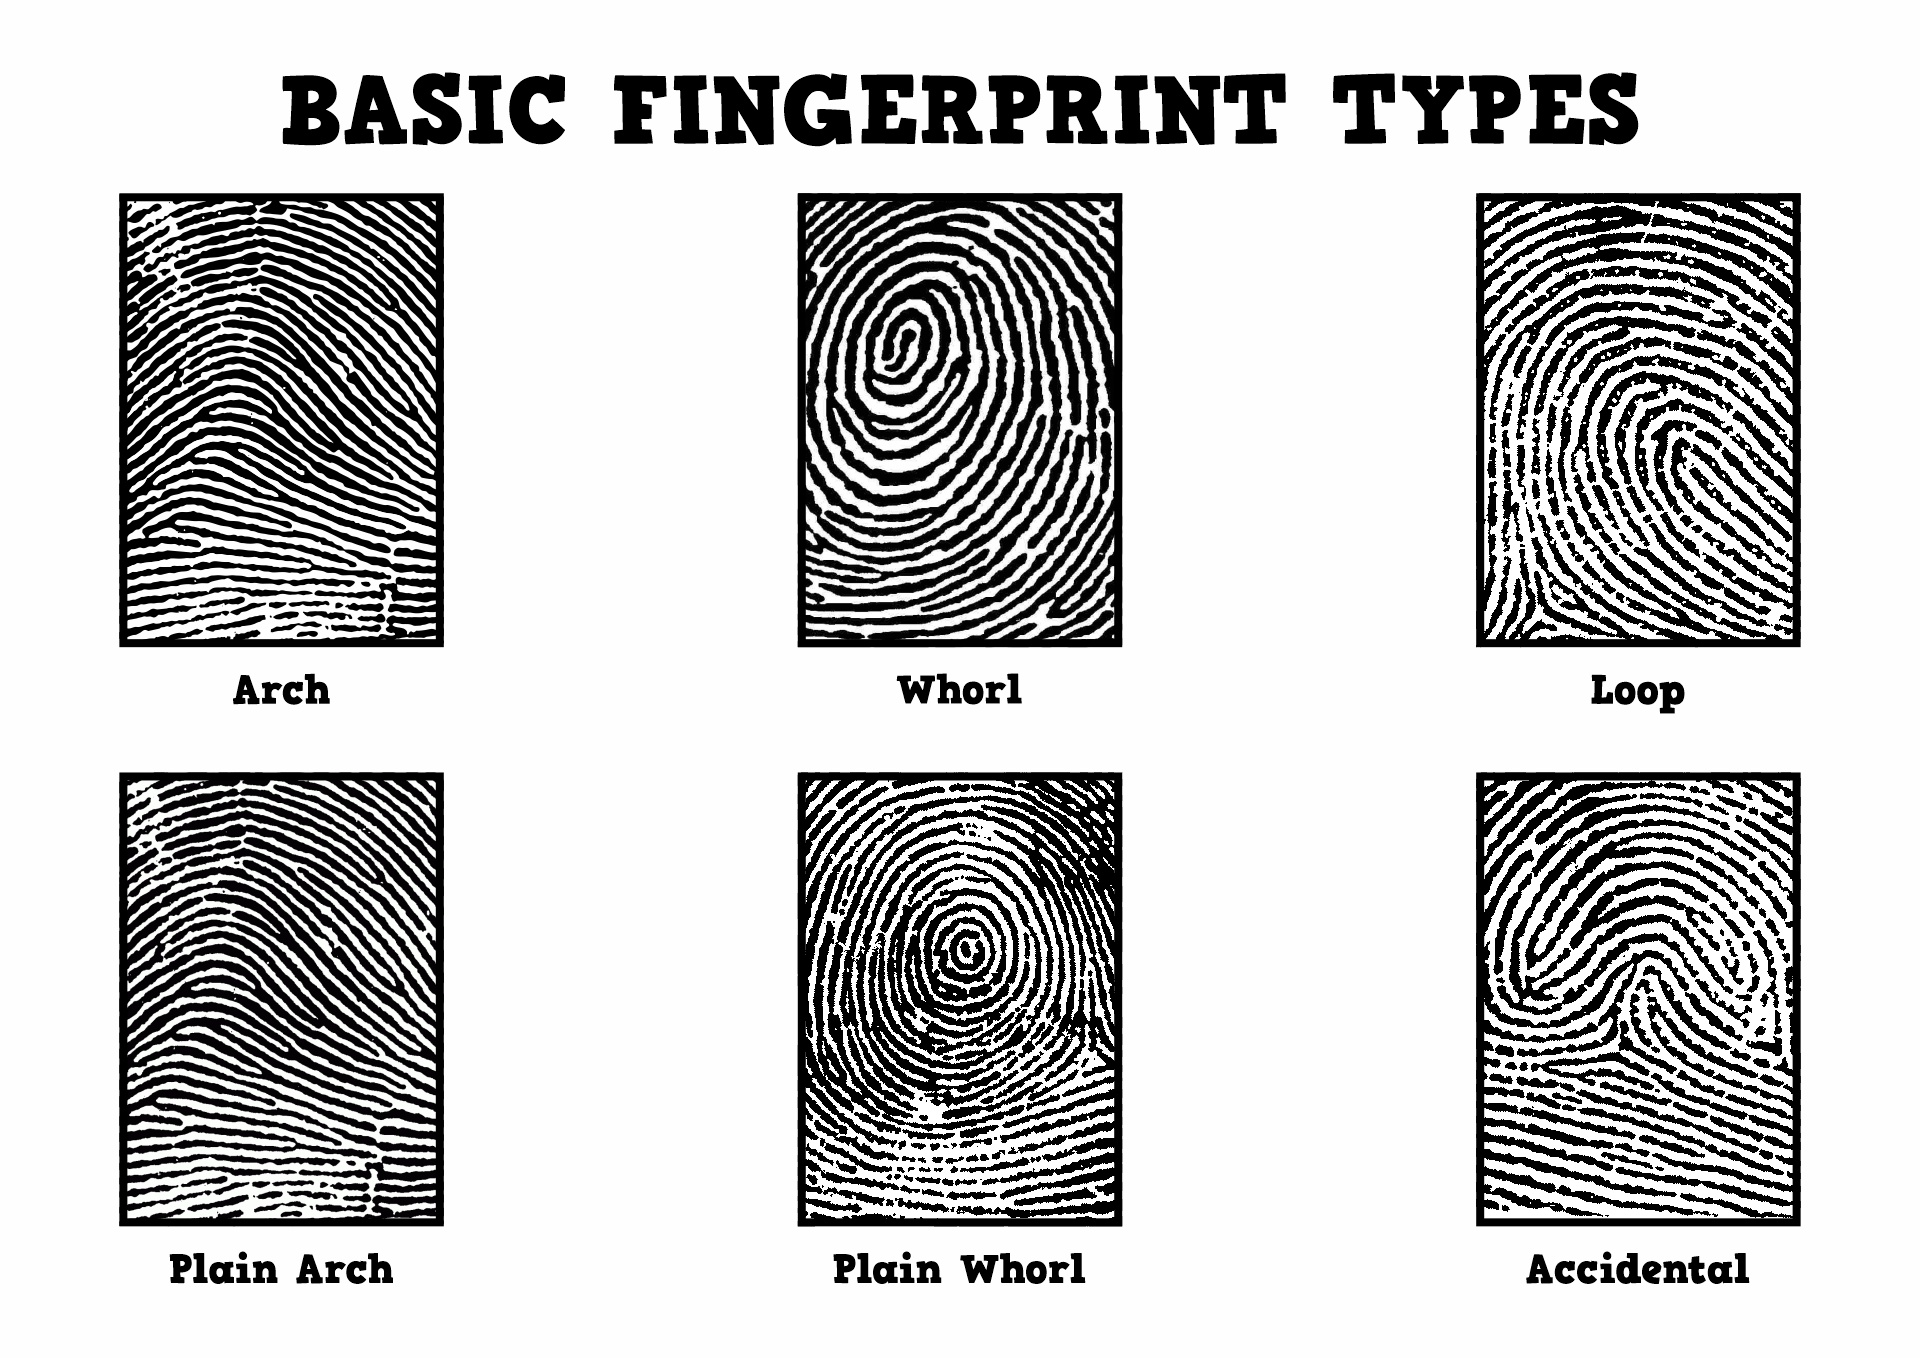 Basic Types of Fingerprint Patterns Image